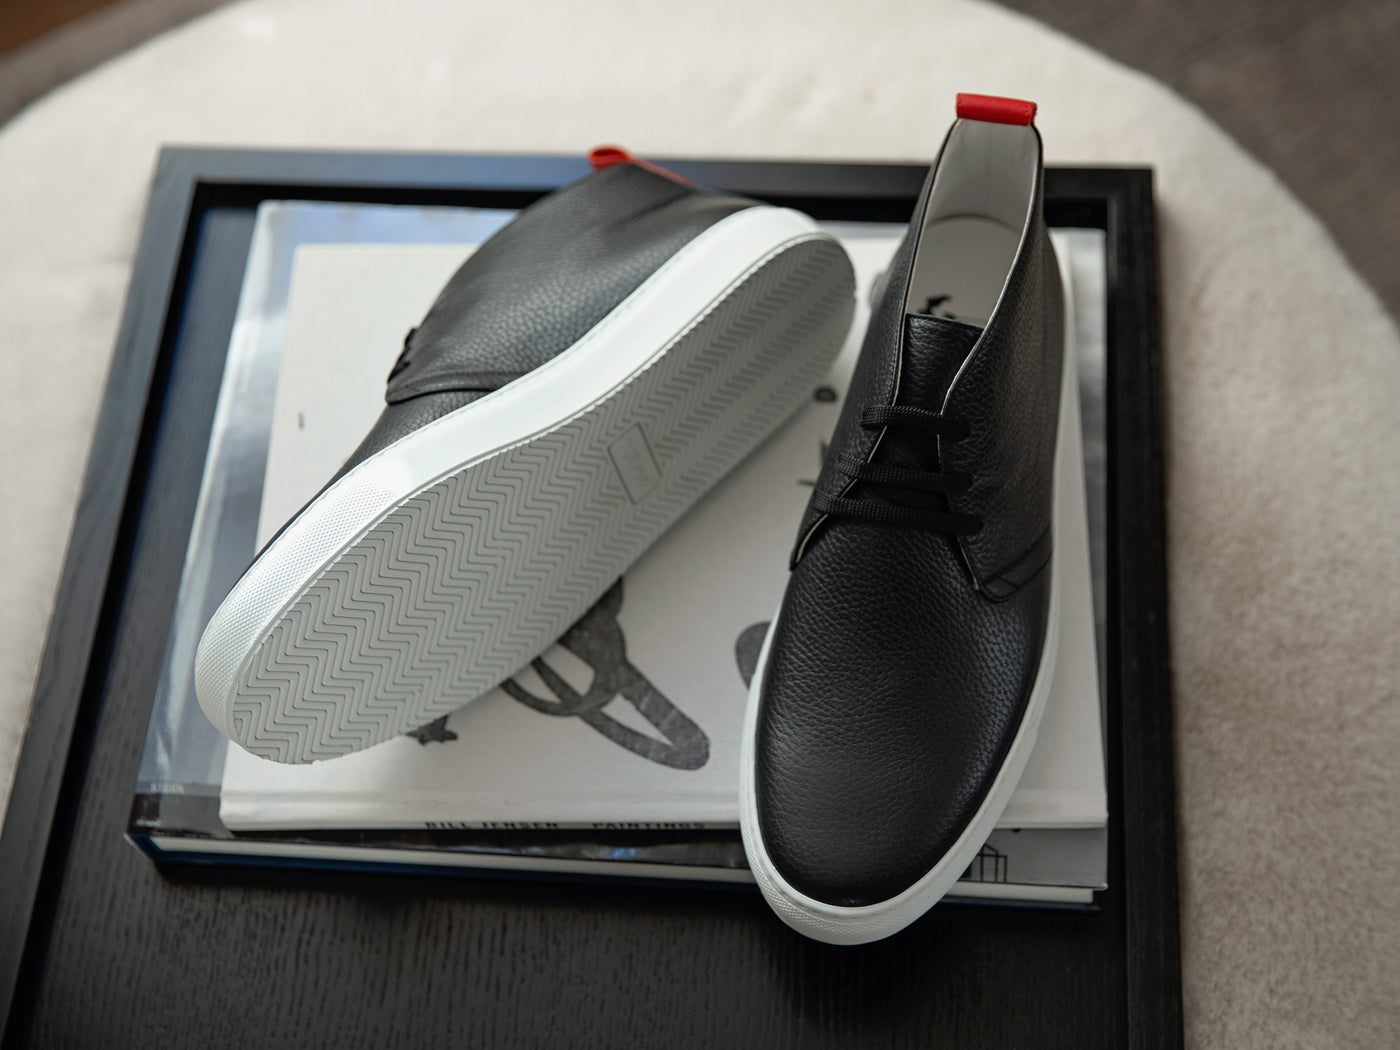 Men's Black Leather Chukka Sneaker by Del Toro Shoes